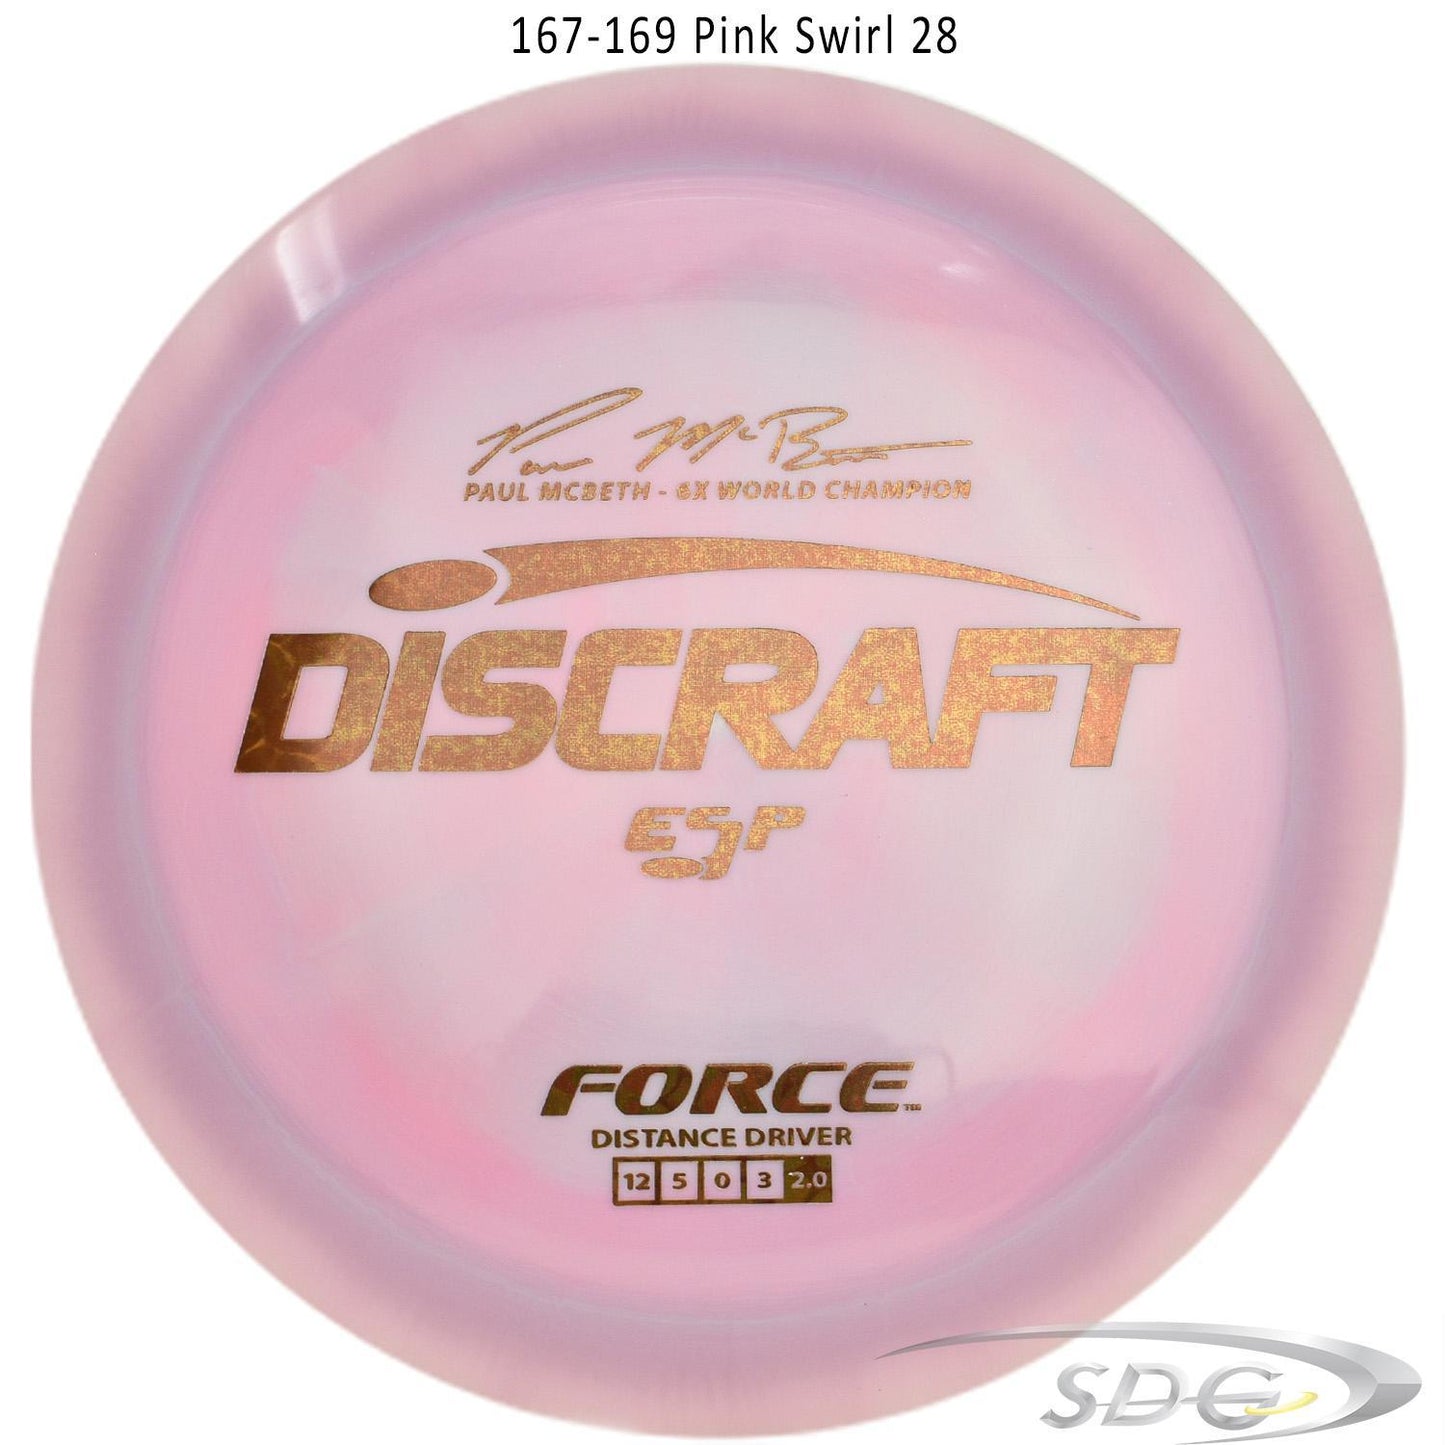 discraft-esp-force-6x-paul-mcbeth-signature-disc-golf-distance-driver-169-160-weights 167-169 Pink Swirl 28 